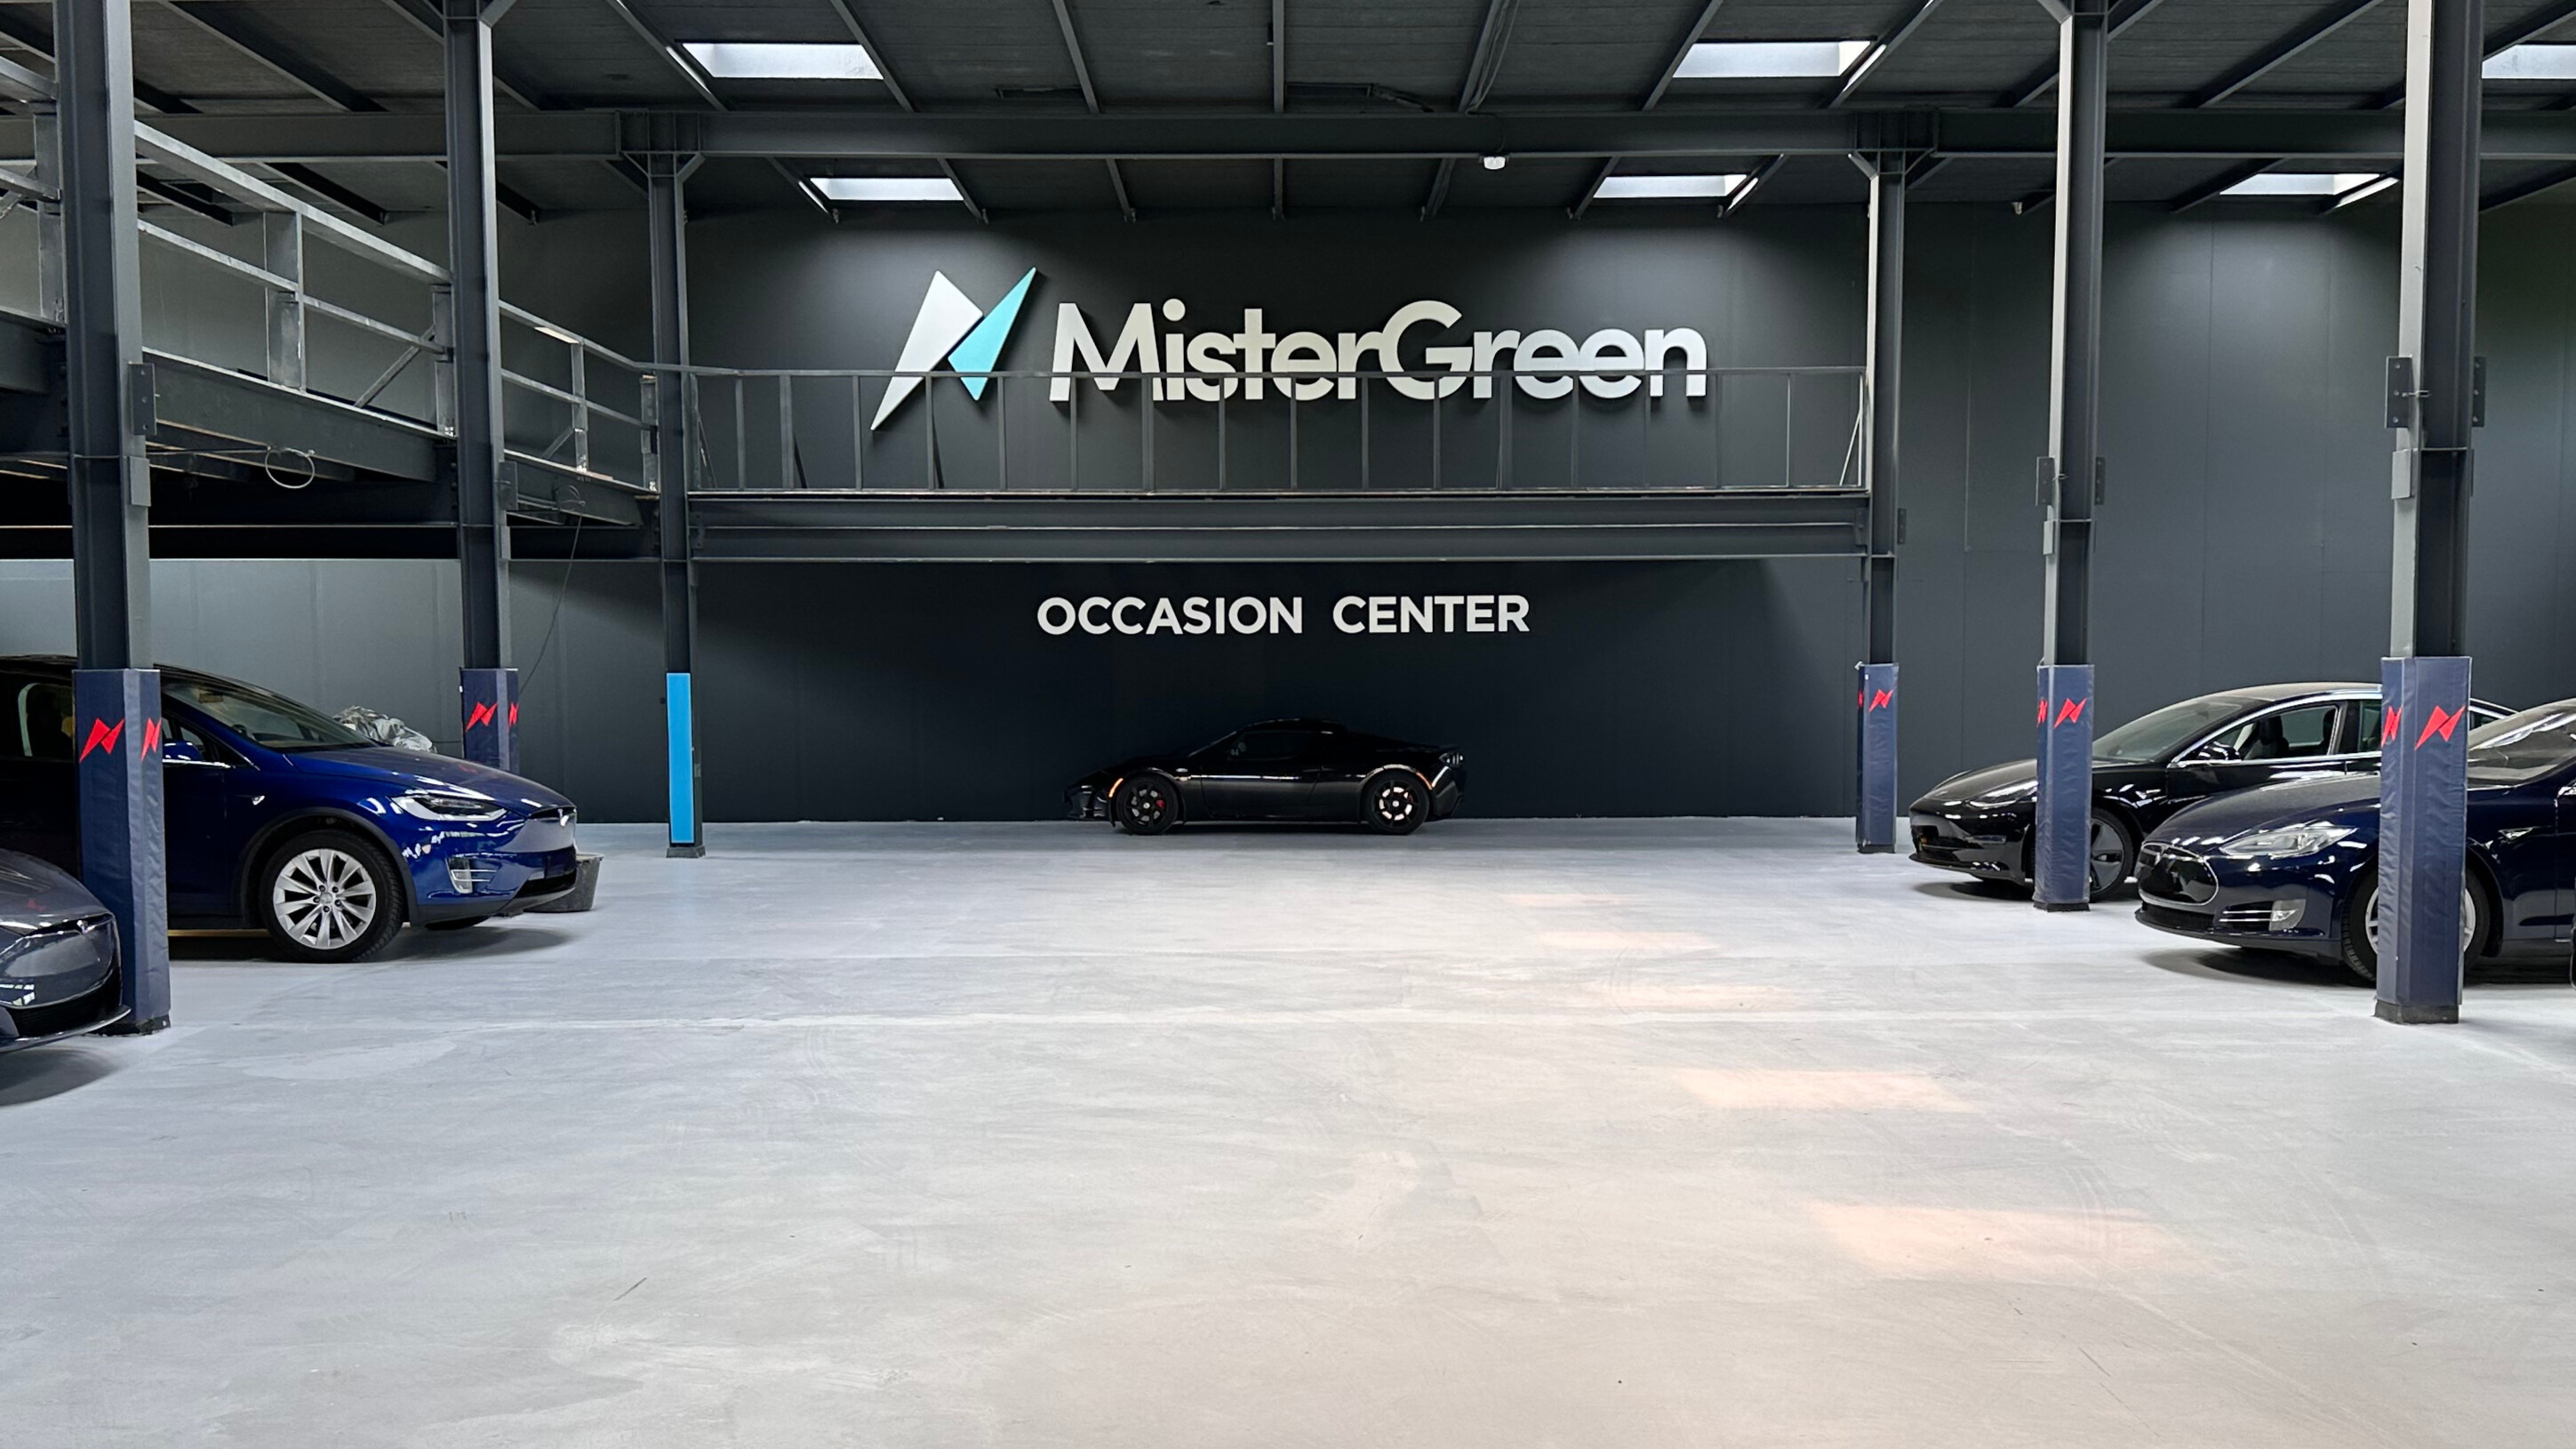 MisterGreen Occasion Center Firmenwagen